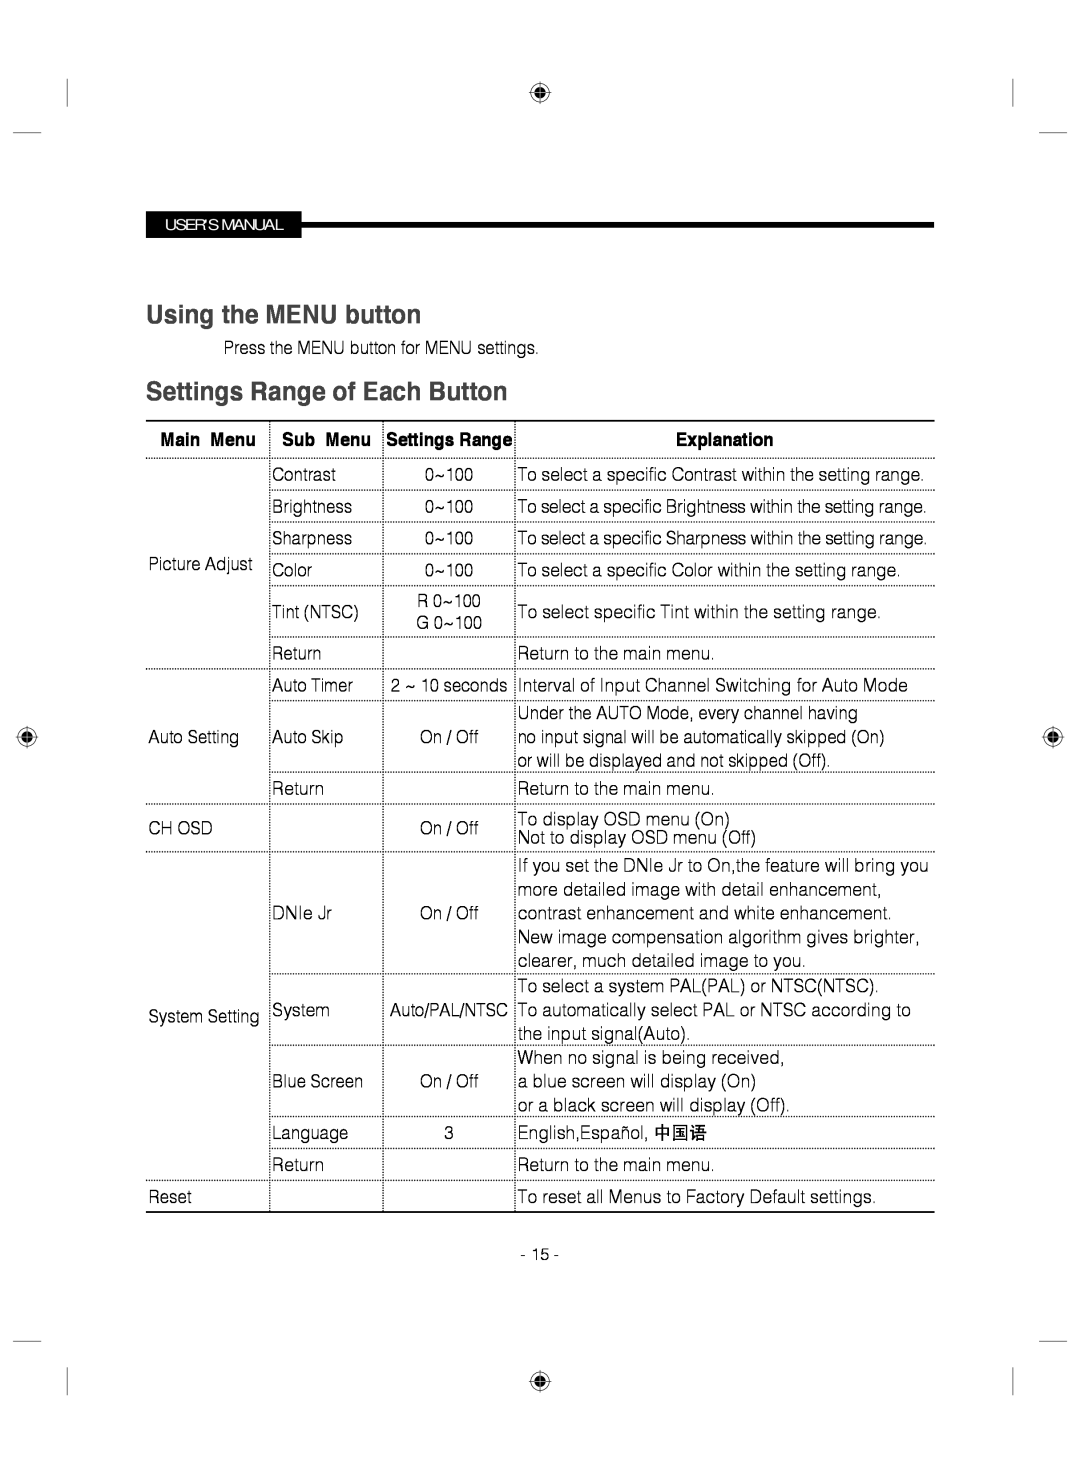 Samsung SMC-145 manual Using the MENU button, Settings Range of Each Button, Main Menu, Sub Menu, Explanation 